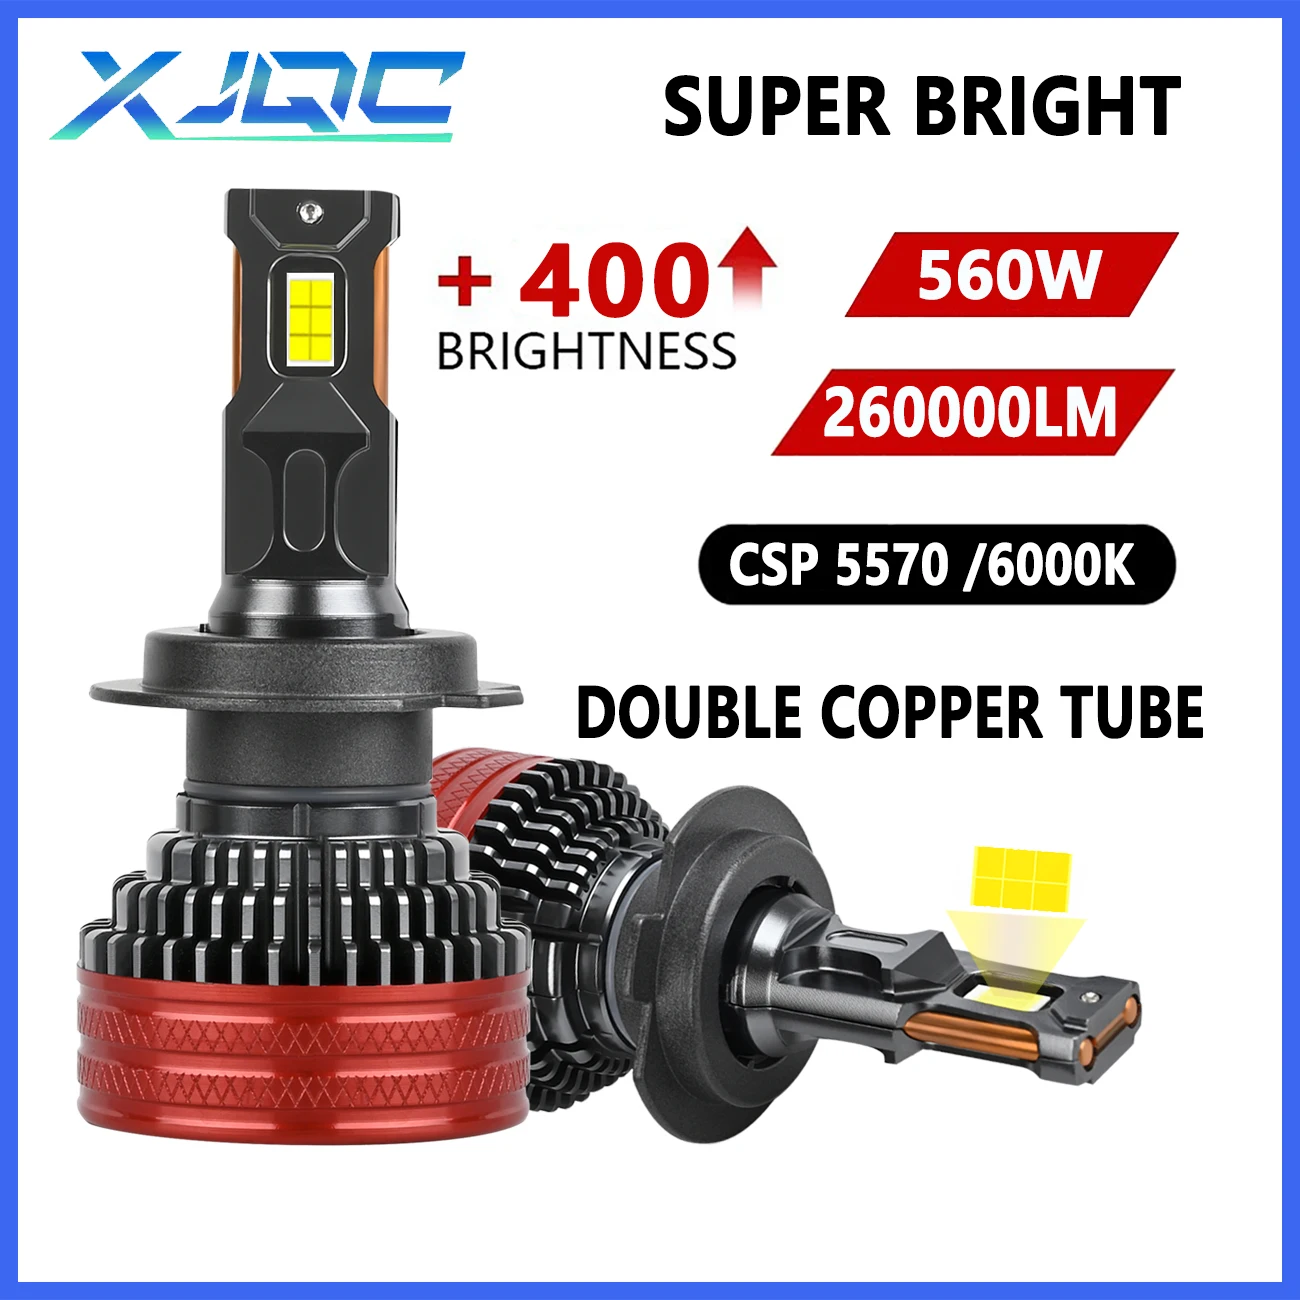 

XJQC H4 H7 Car LED Headlight 260000LM 6000K 560W H1 H3 H8 H9 H11 9005 9006 9012 CSP 5570 Canbus 12V Double Copper Tube Headlamp